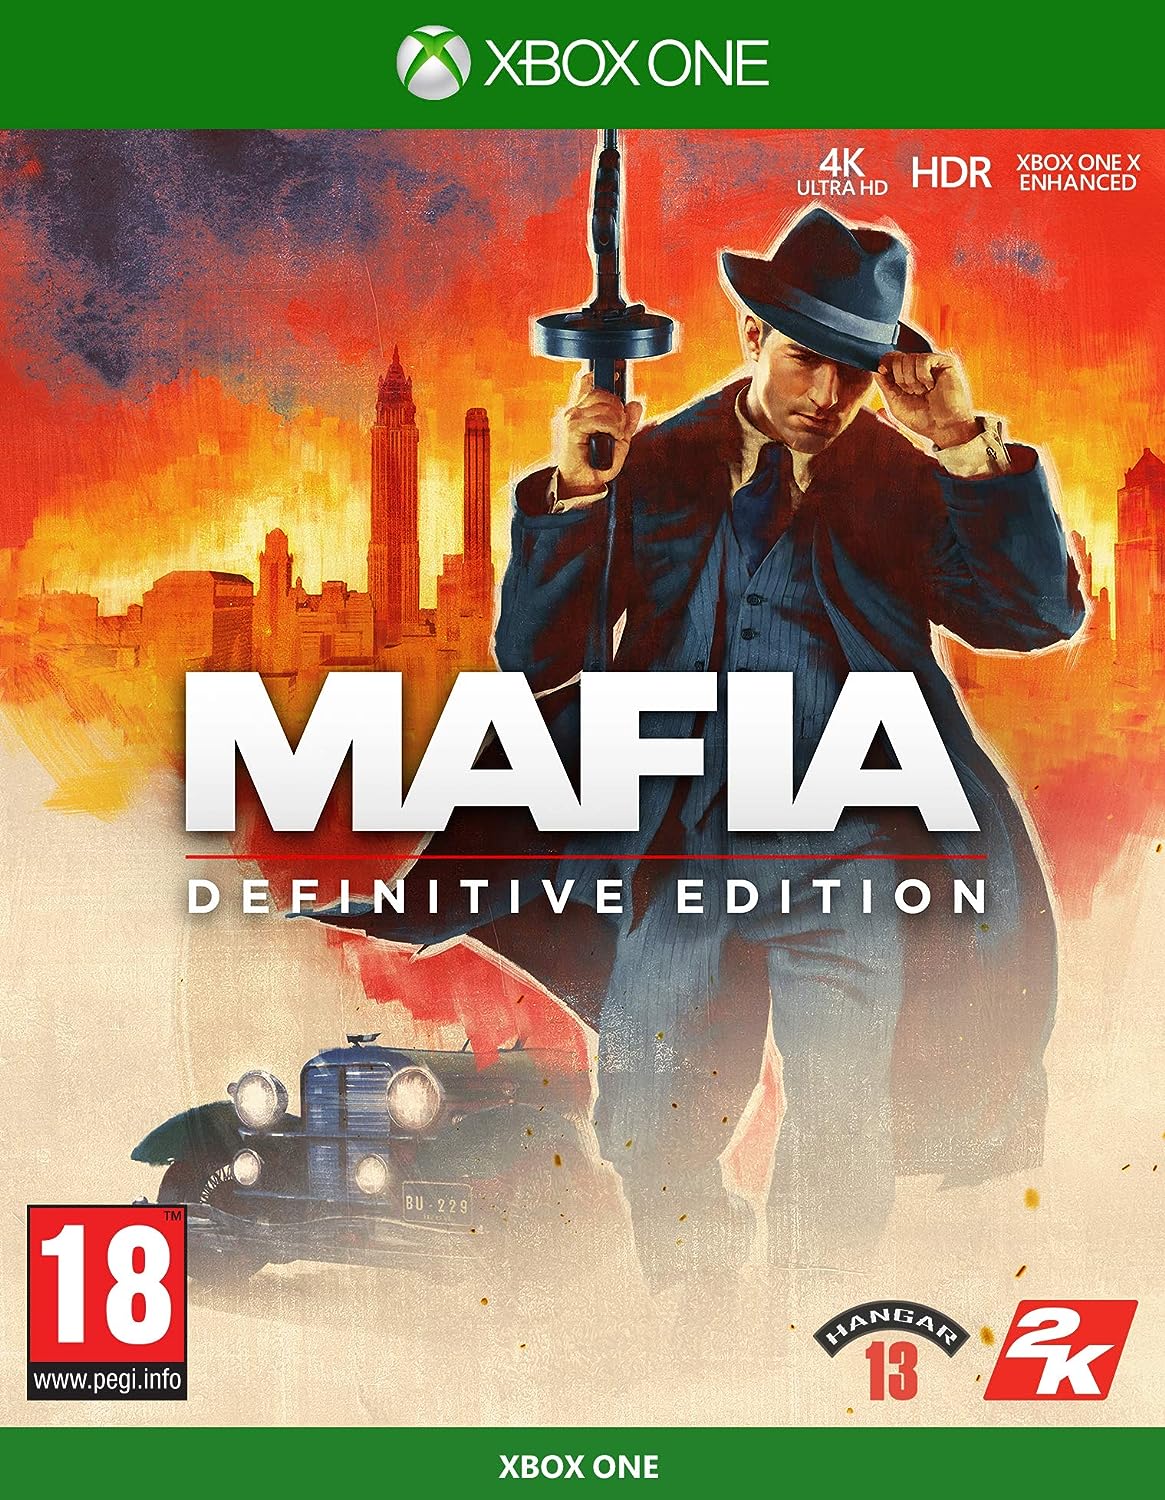 Xbox One Game - Mafia Definitive Edition - 2k - PEGI 18